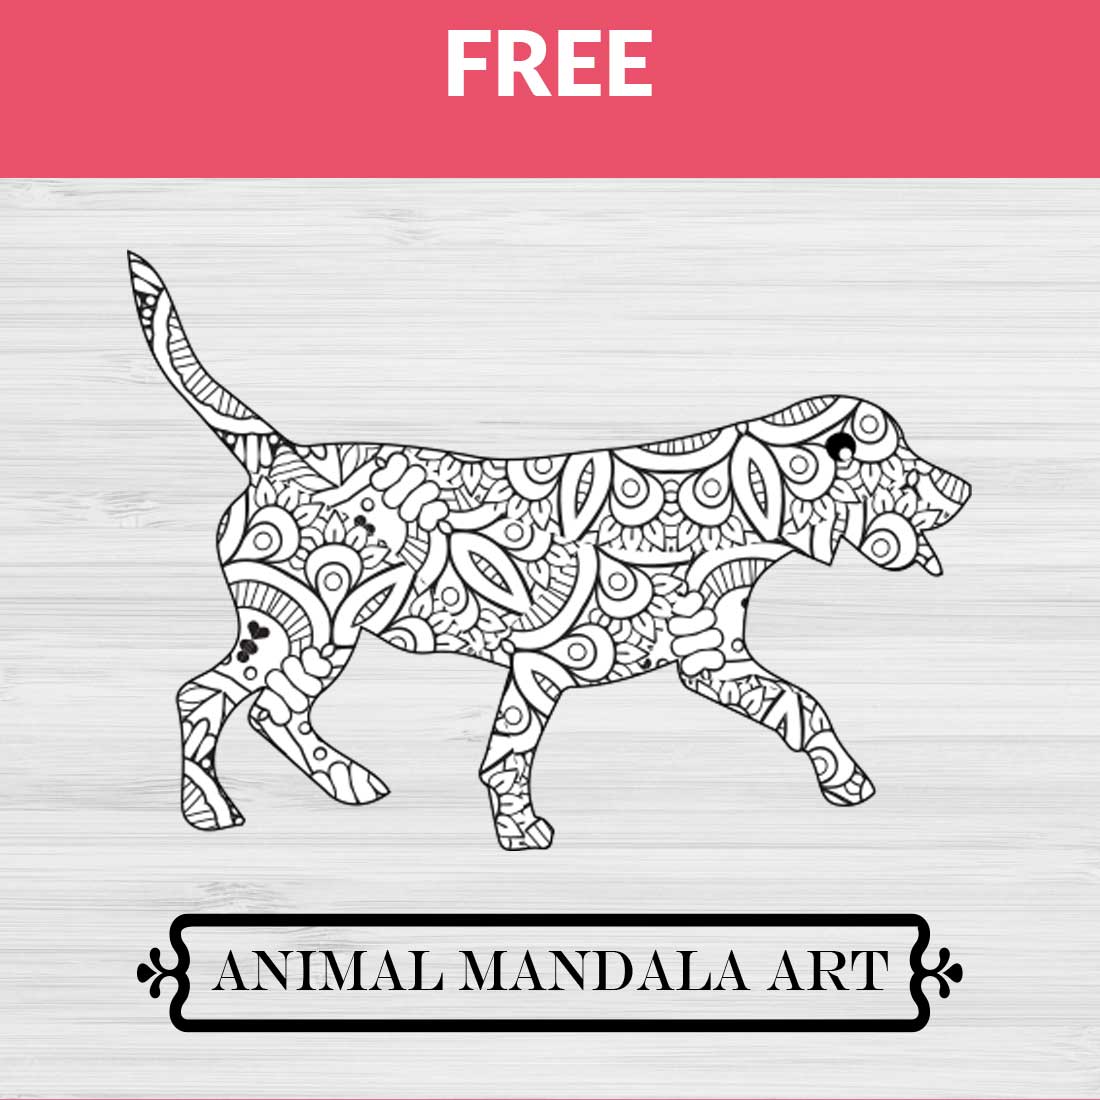 Dog Mandala, Animal Mandala preview image.